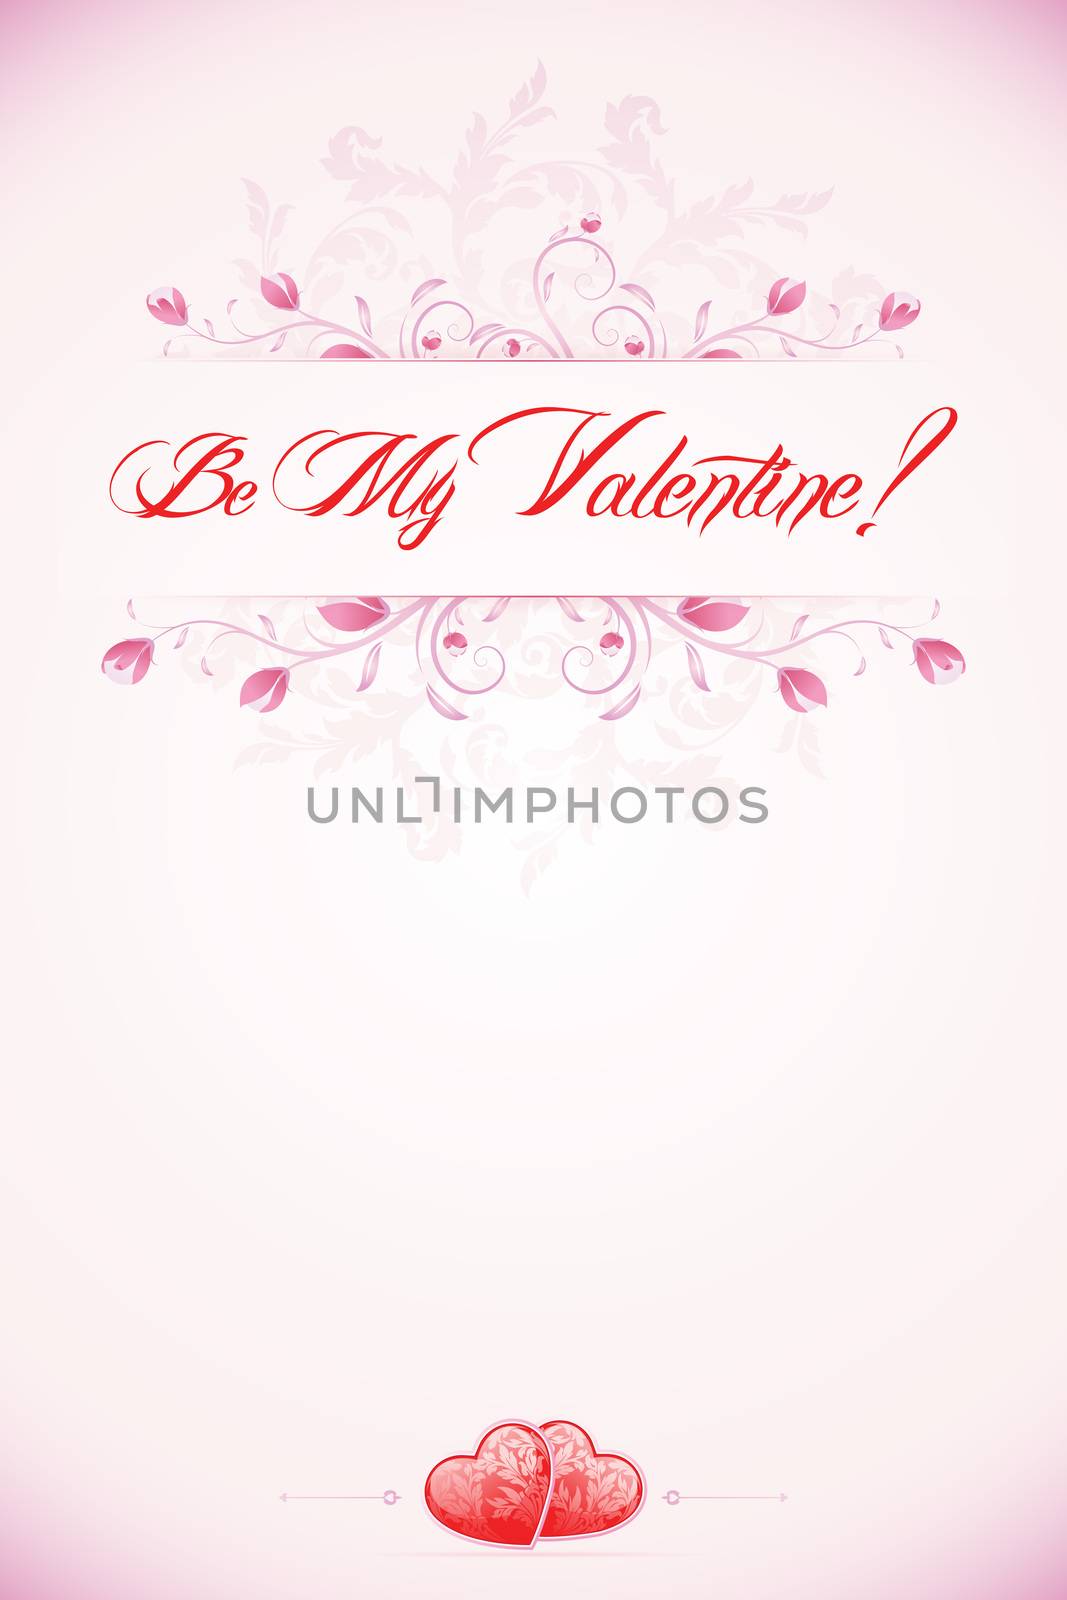 Valentine's Day type text calligraphic headline with Be My Valentine